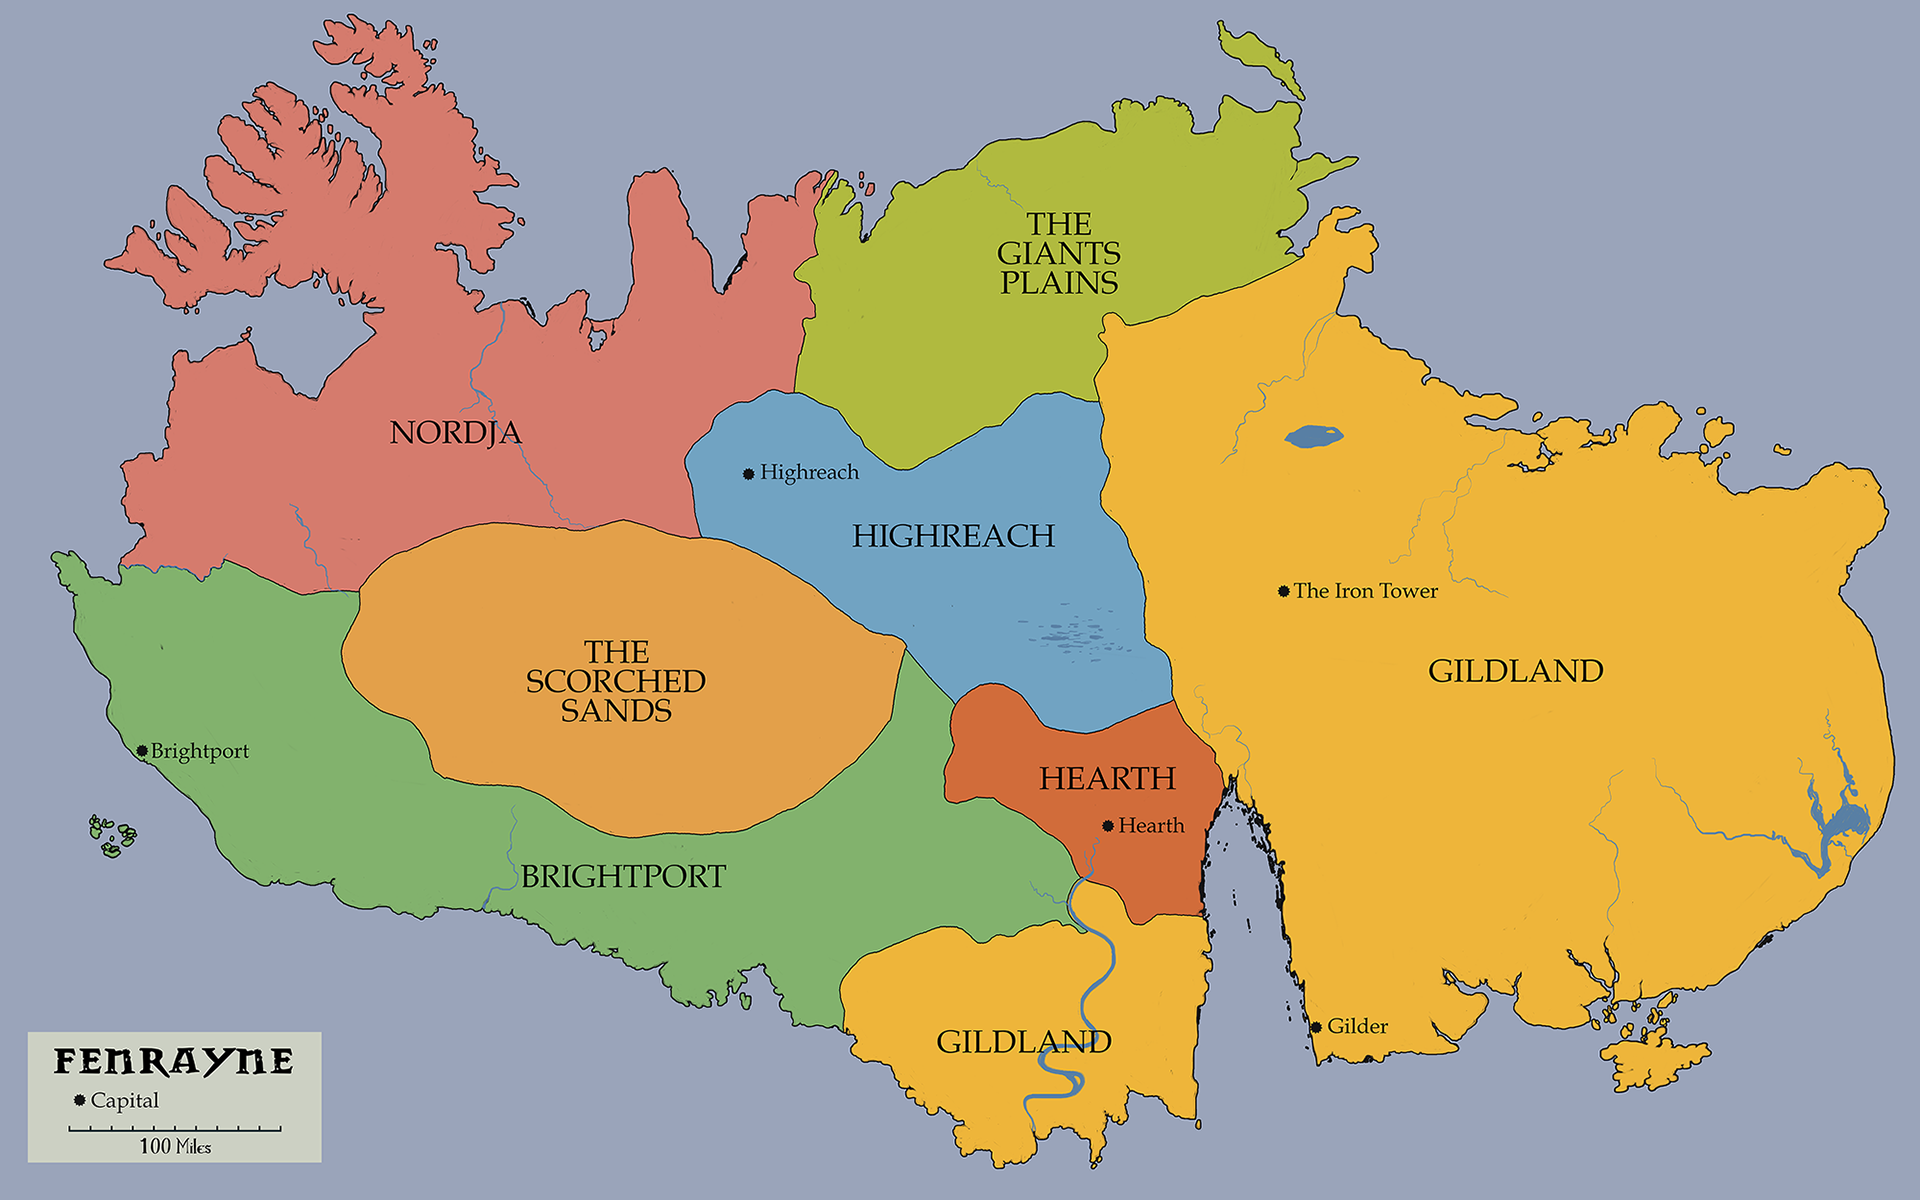 Fenrayne: Political Map